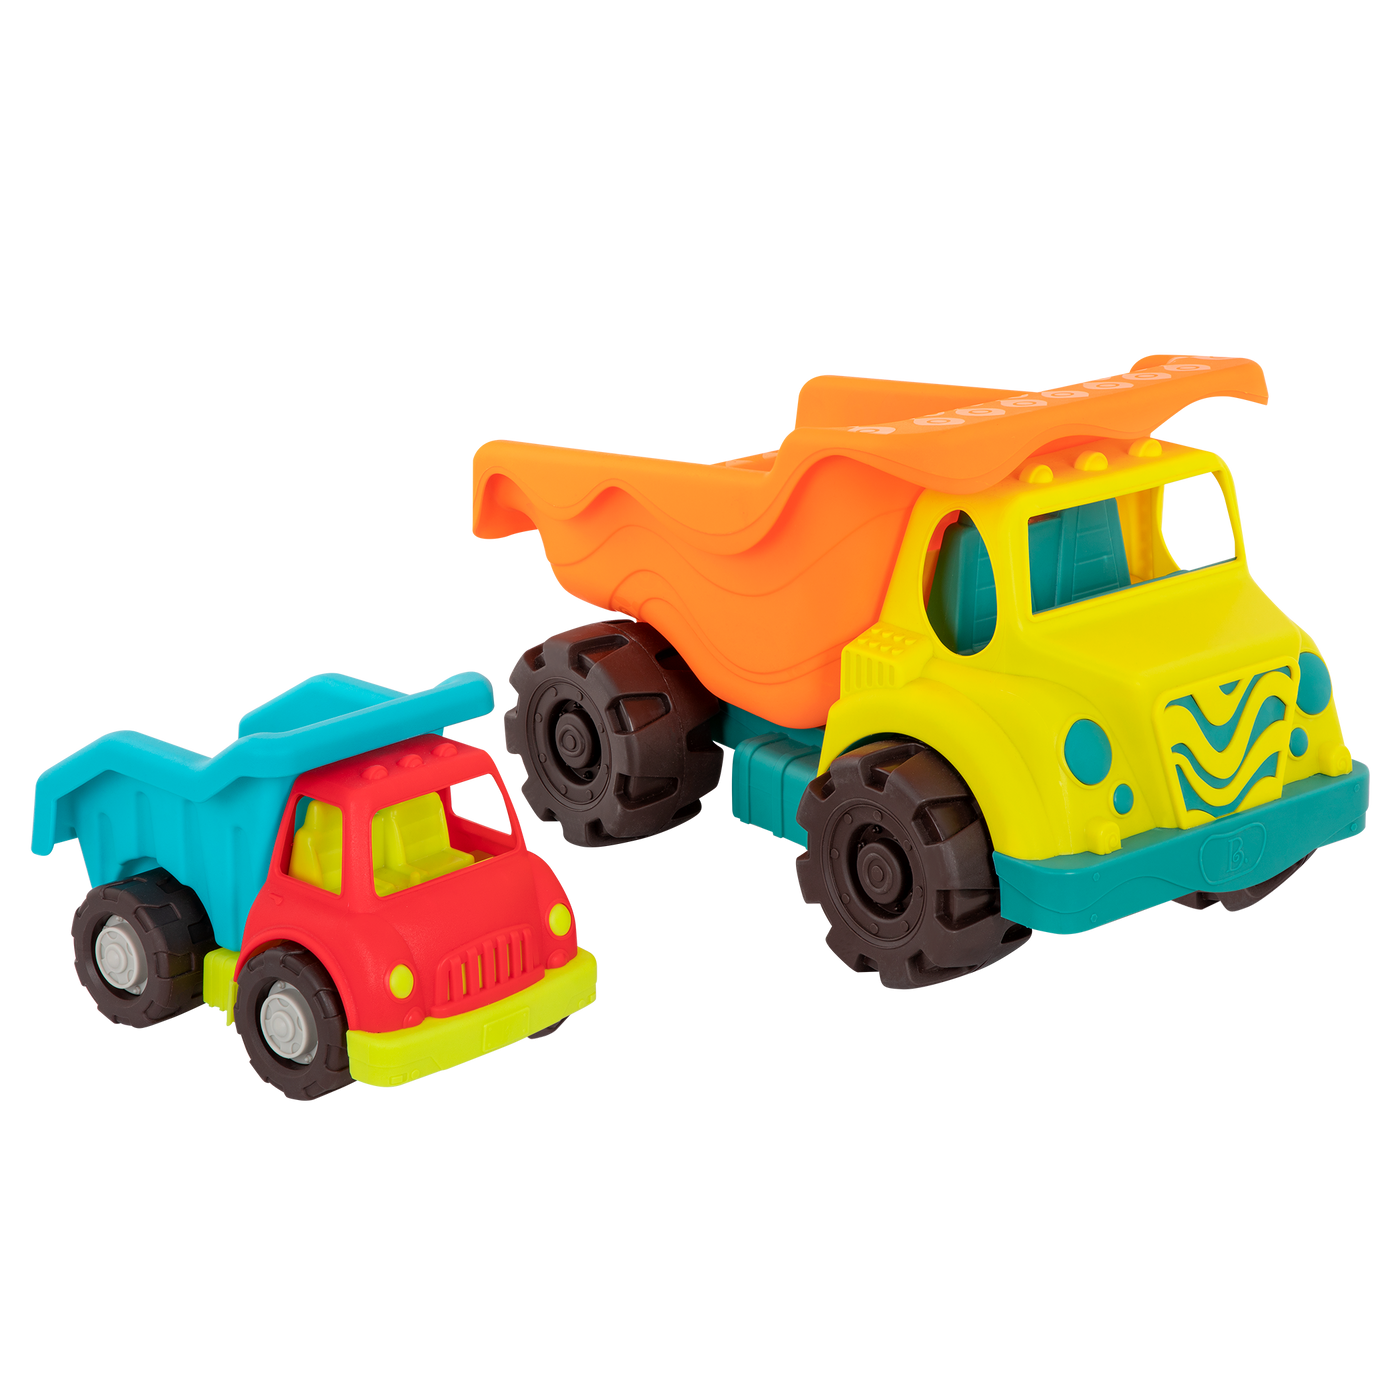 Two toy dump trucks.